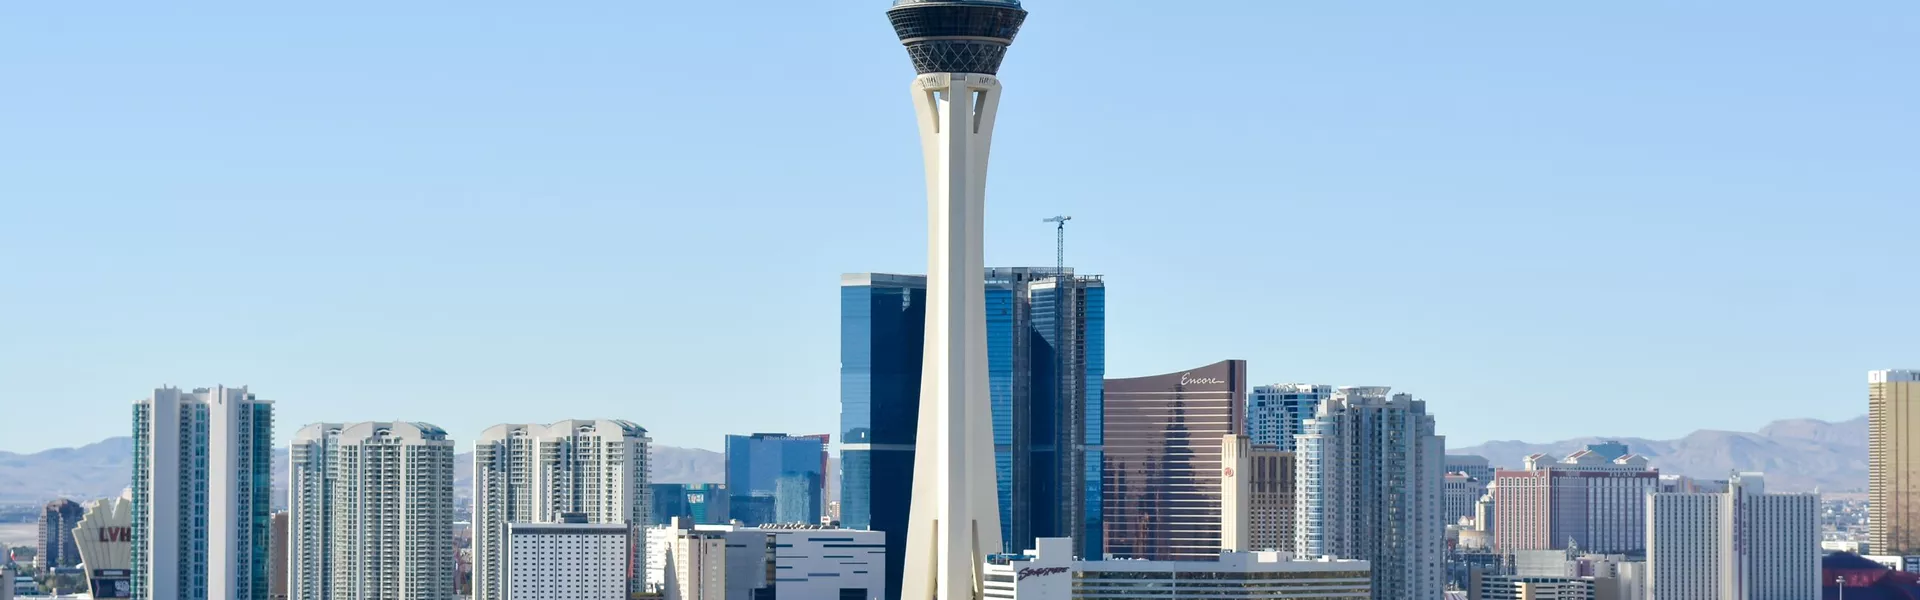 Website Banner-Las Vegas Skyline - 498998947